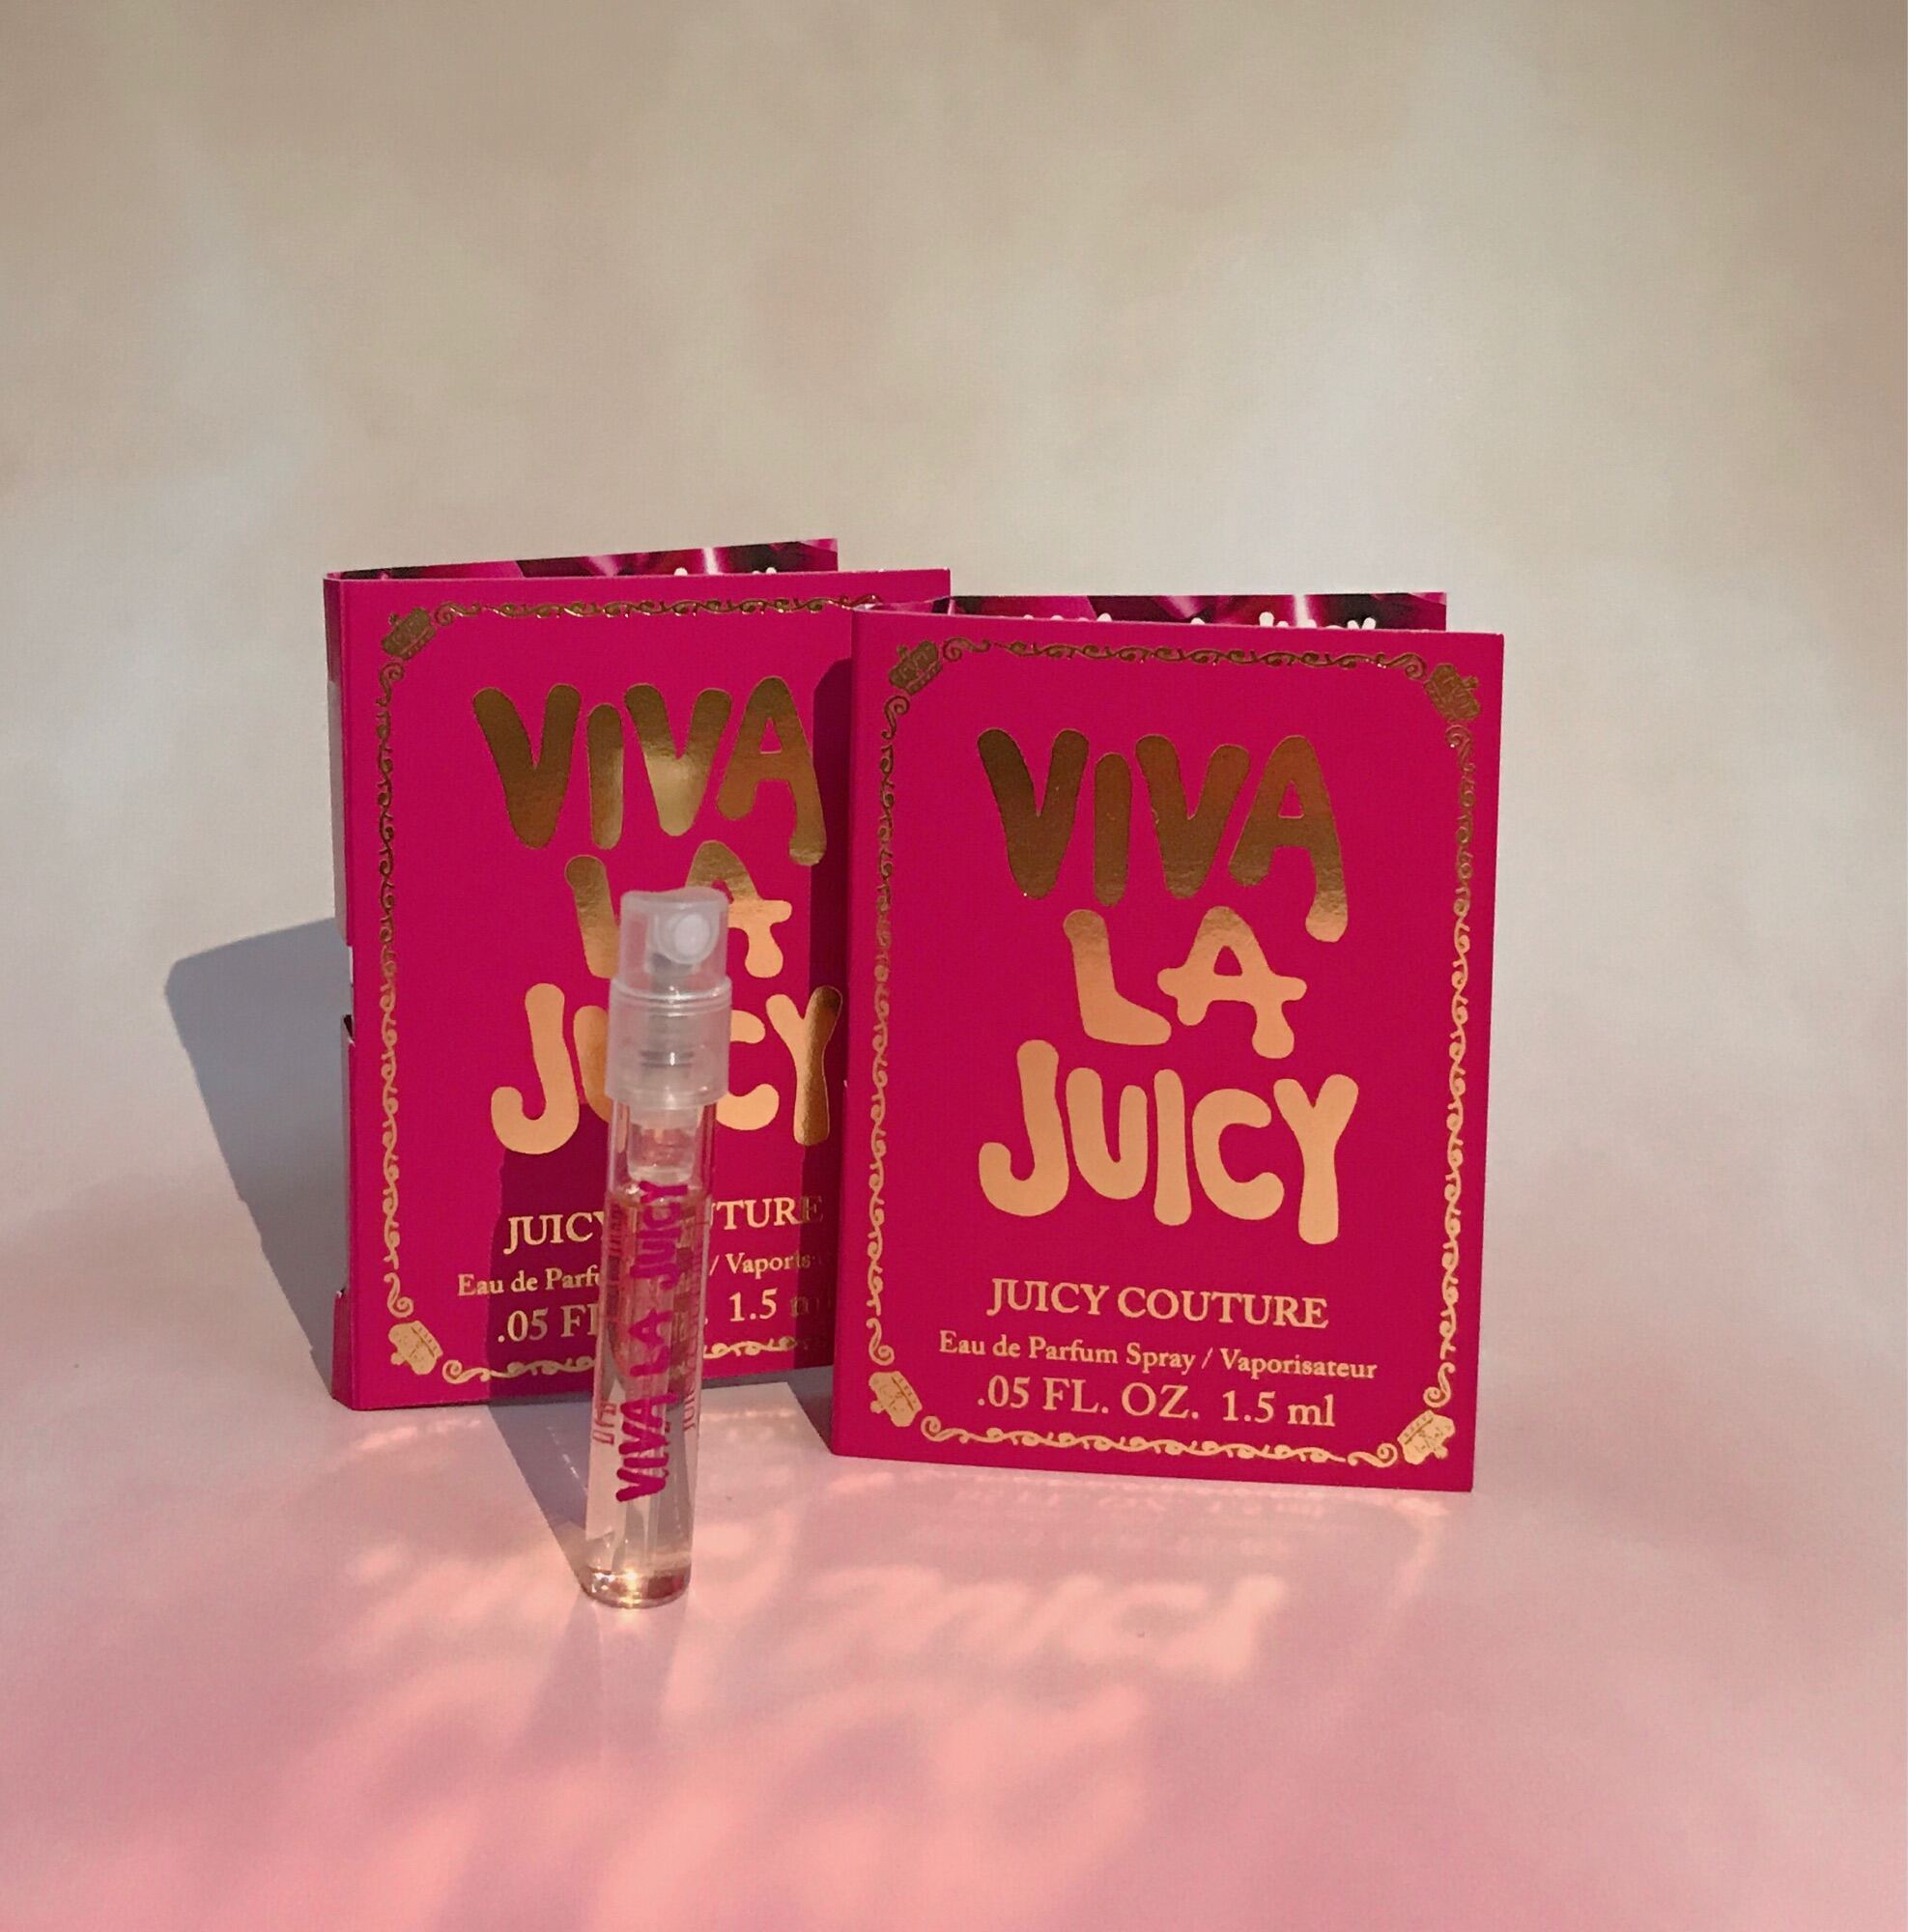 Mẫu thử nước hoa Vial Viva La Juicy 1.5ml